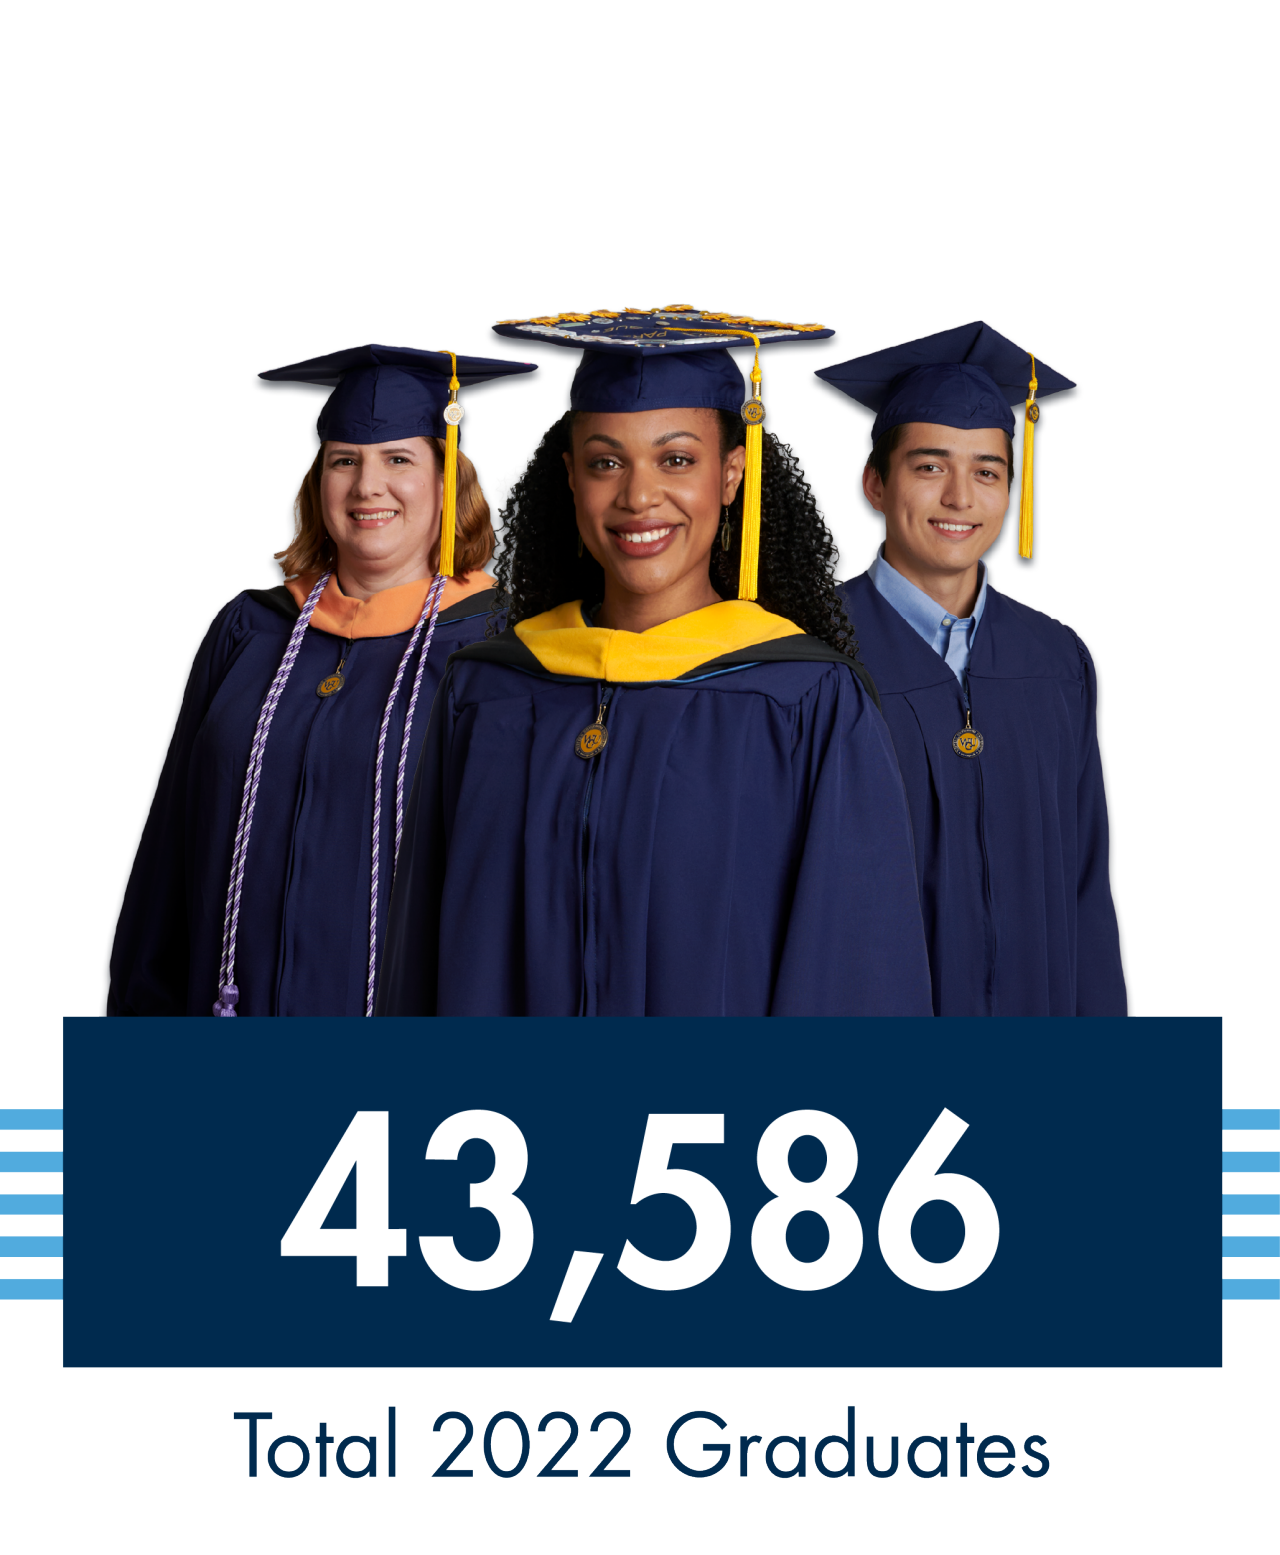 WGU had 43,586 total graduates in 2022.